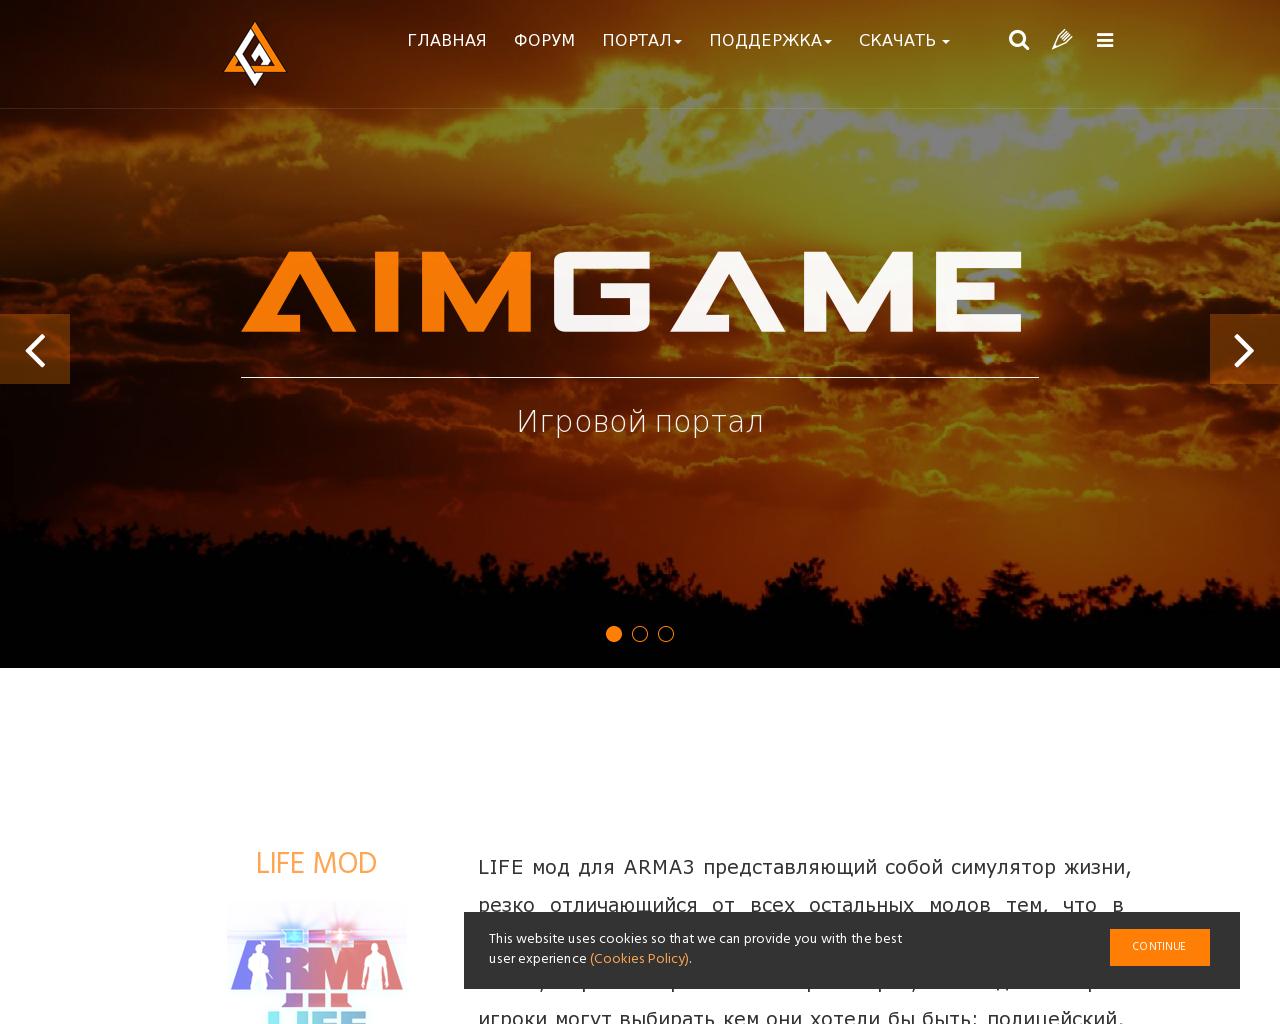 Изображение сайта aimgame.ru в разрешении 1280x1024